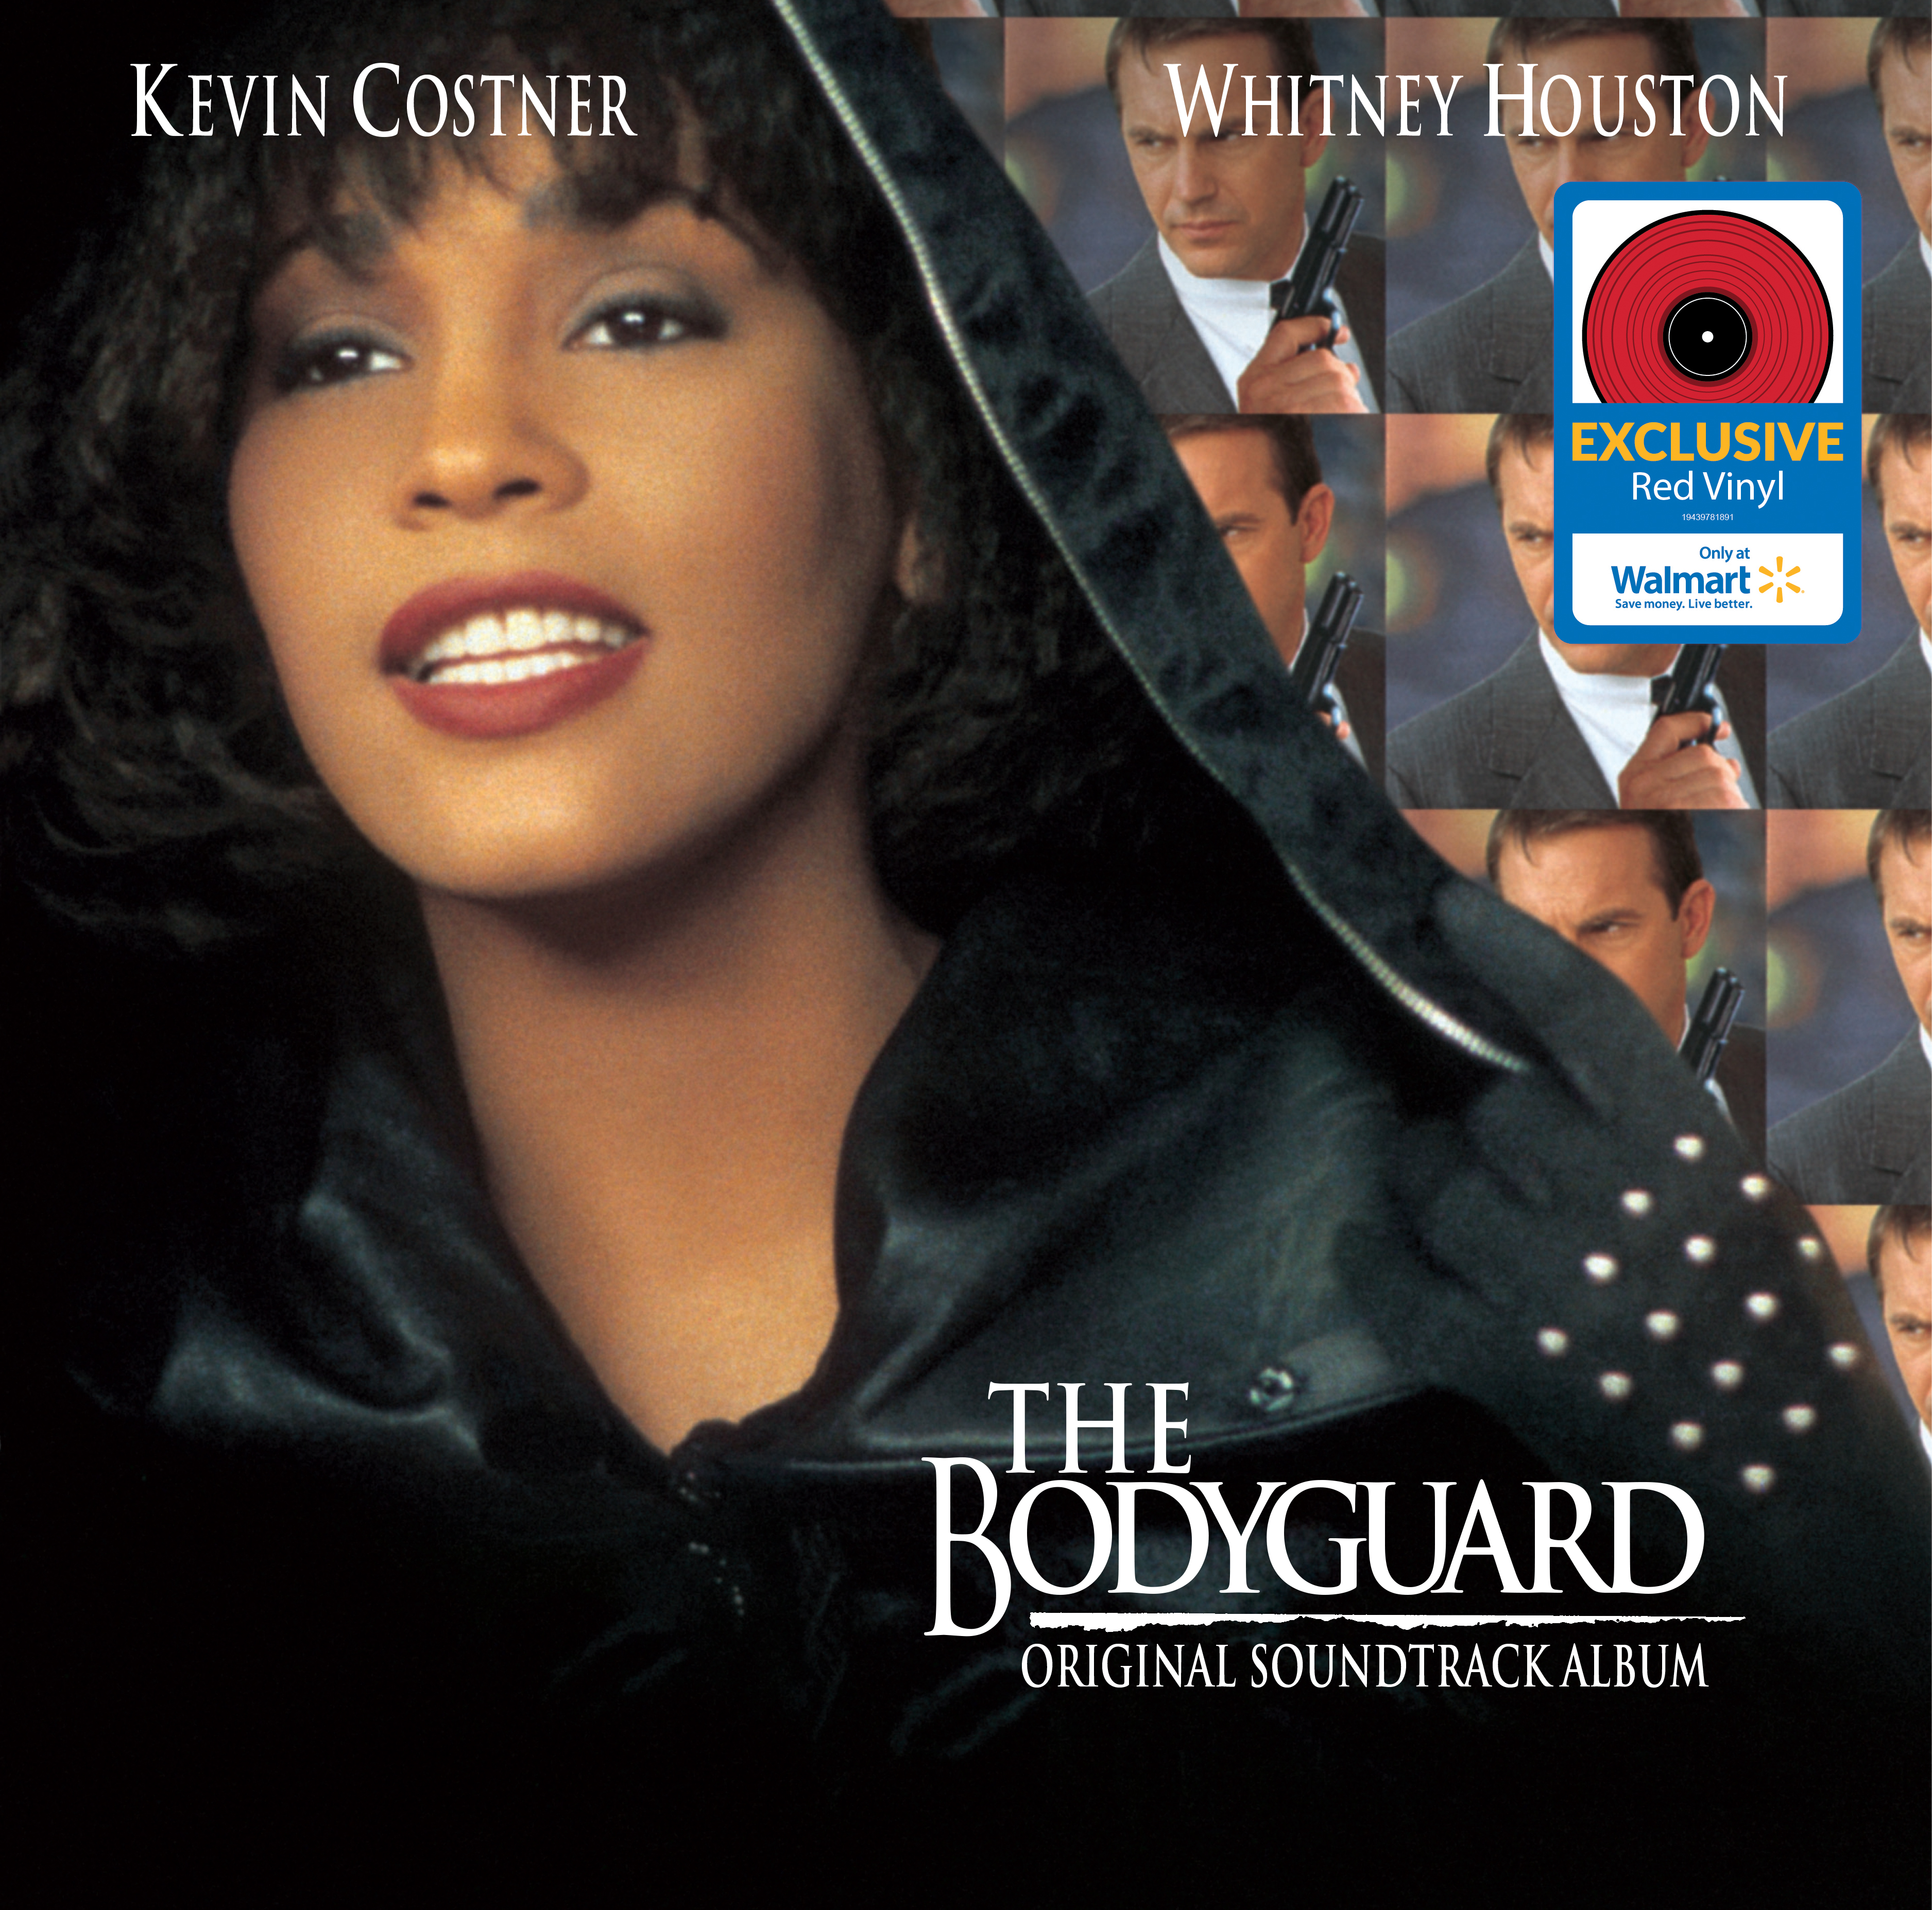 Whitney Houston - The Bodyguard Soundtrack (Walmart Exclusive) - Soundtracks - Vinyl [Exclusive] - image 2 of 2